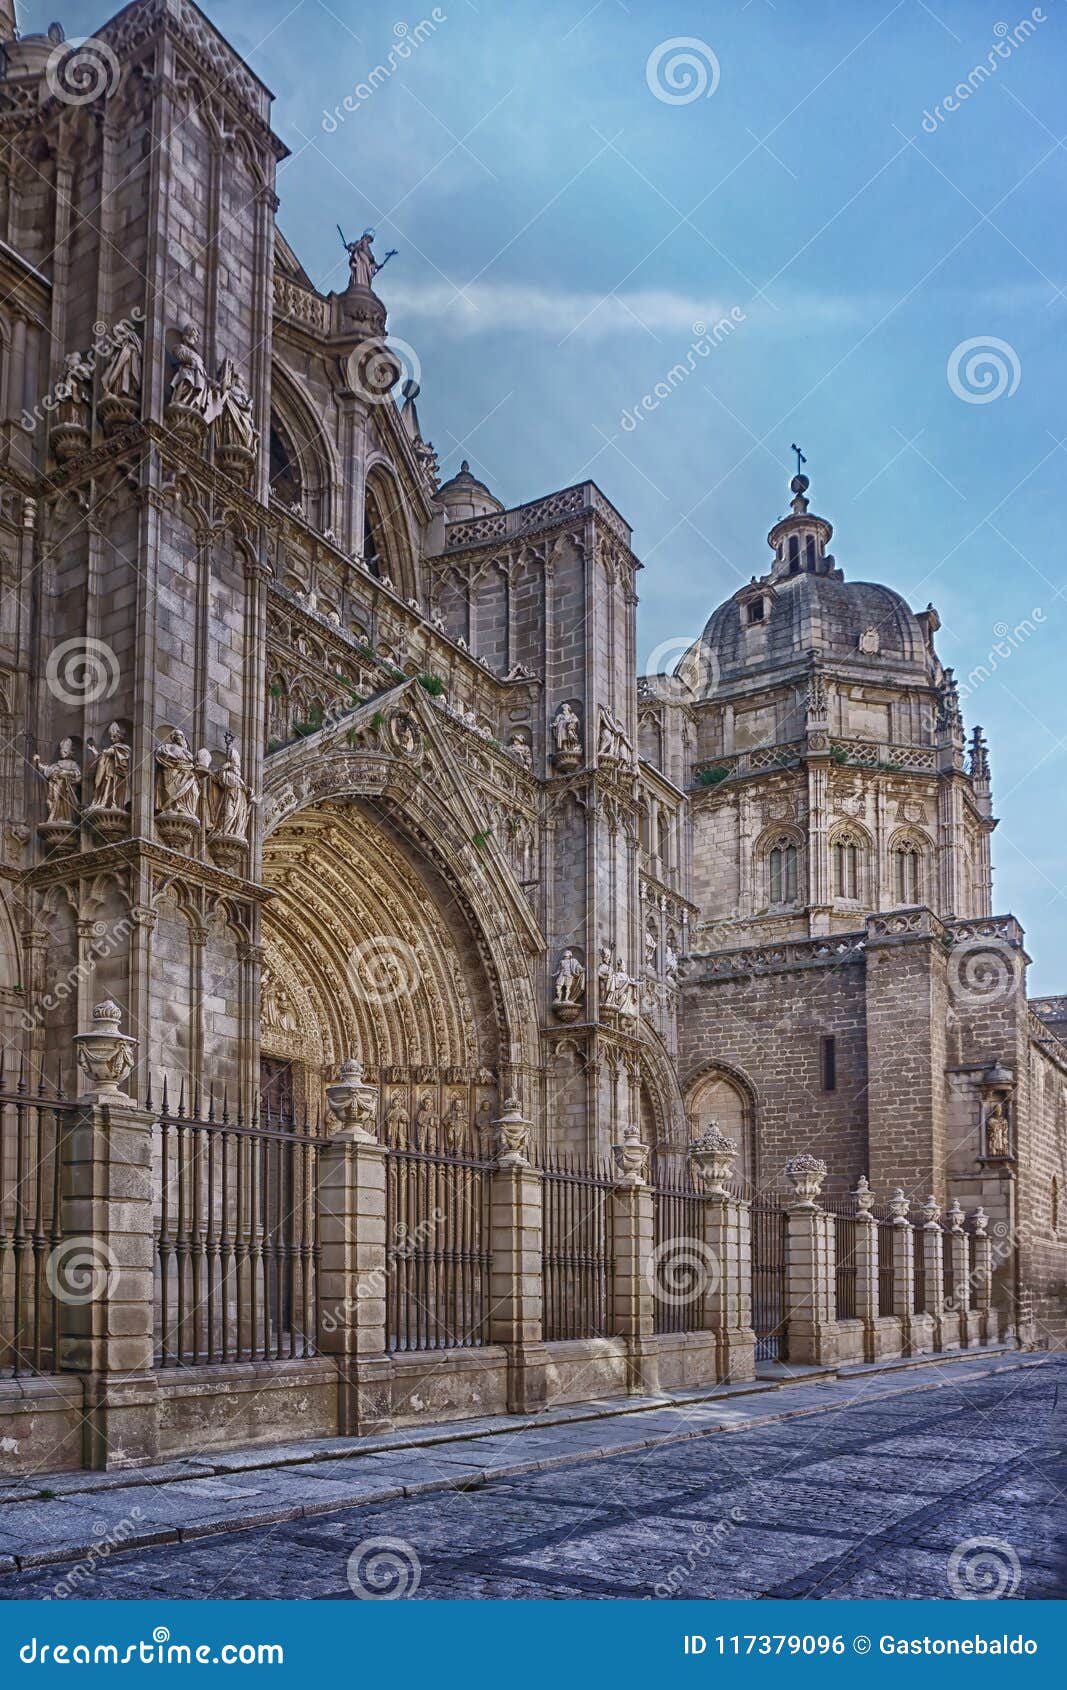 saint mary of toledo cathedral, espaÃÂ±a